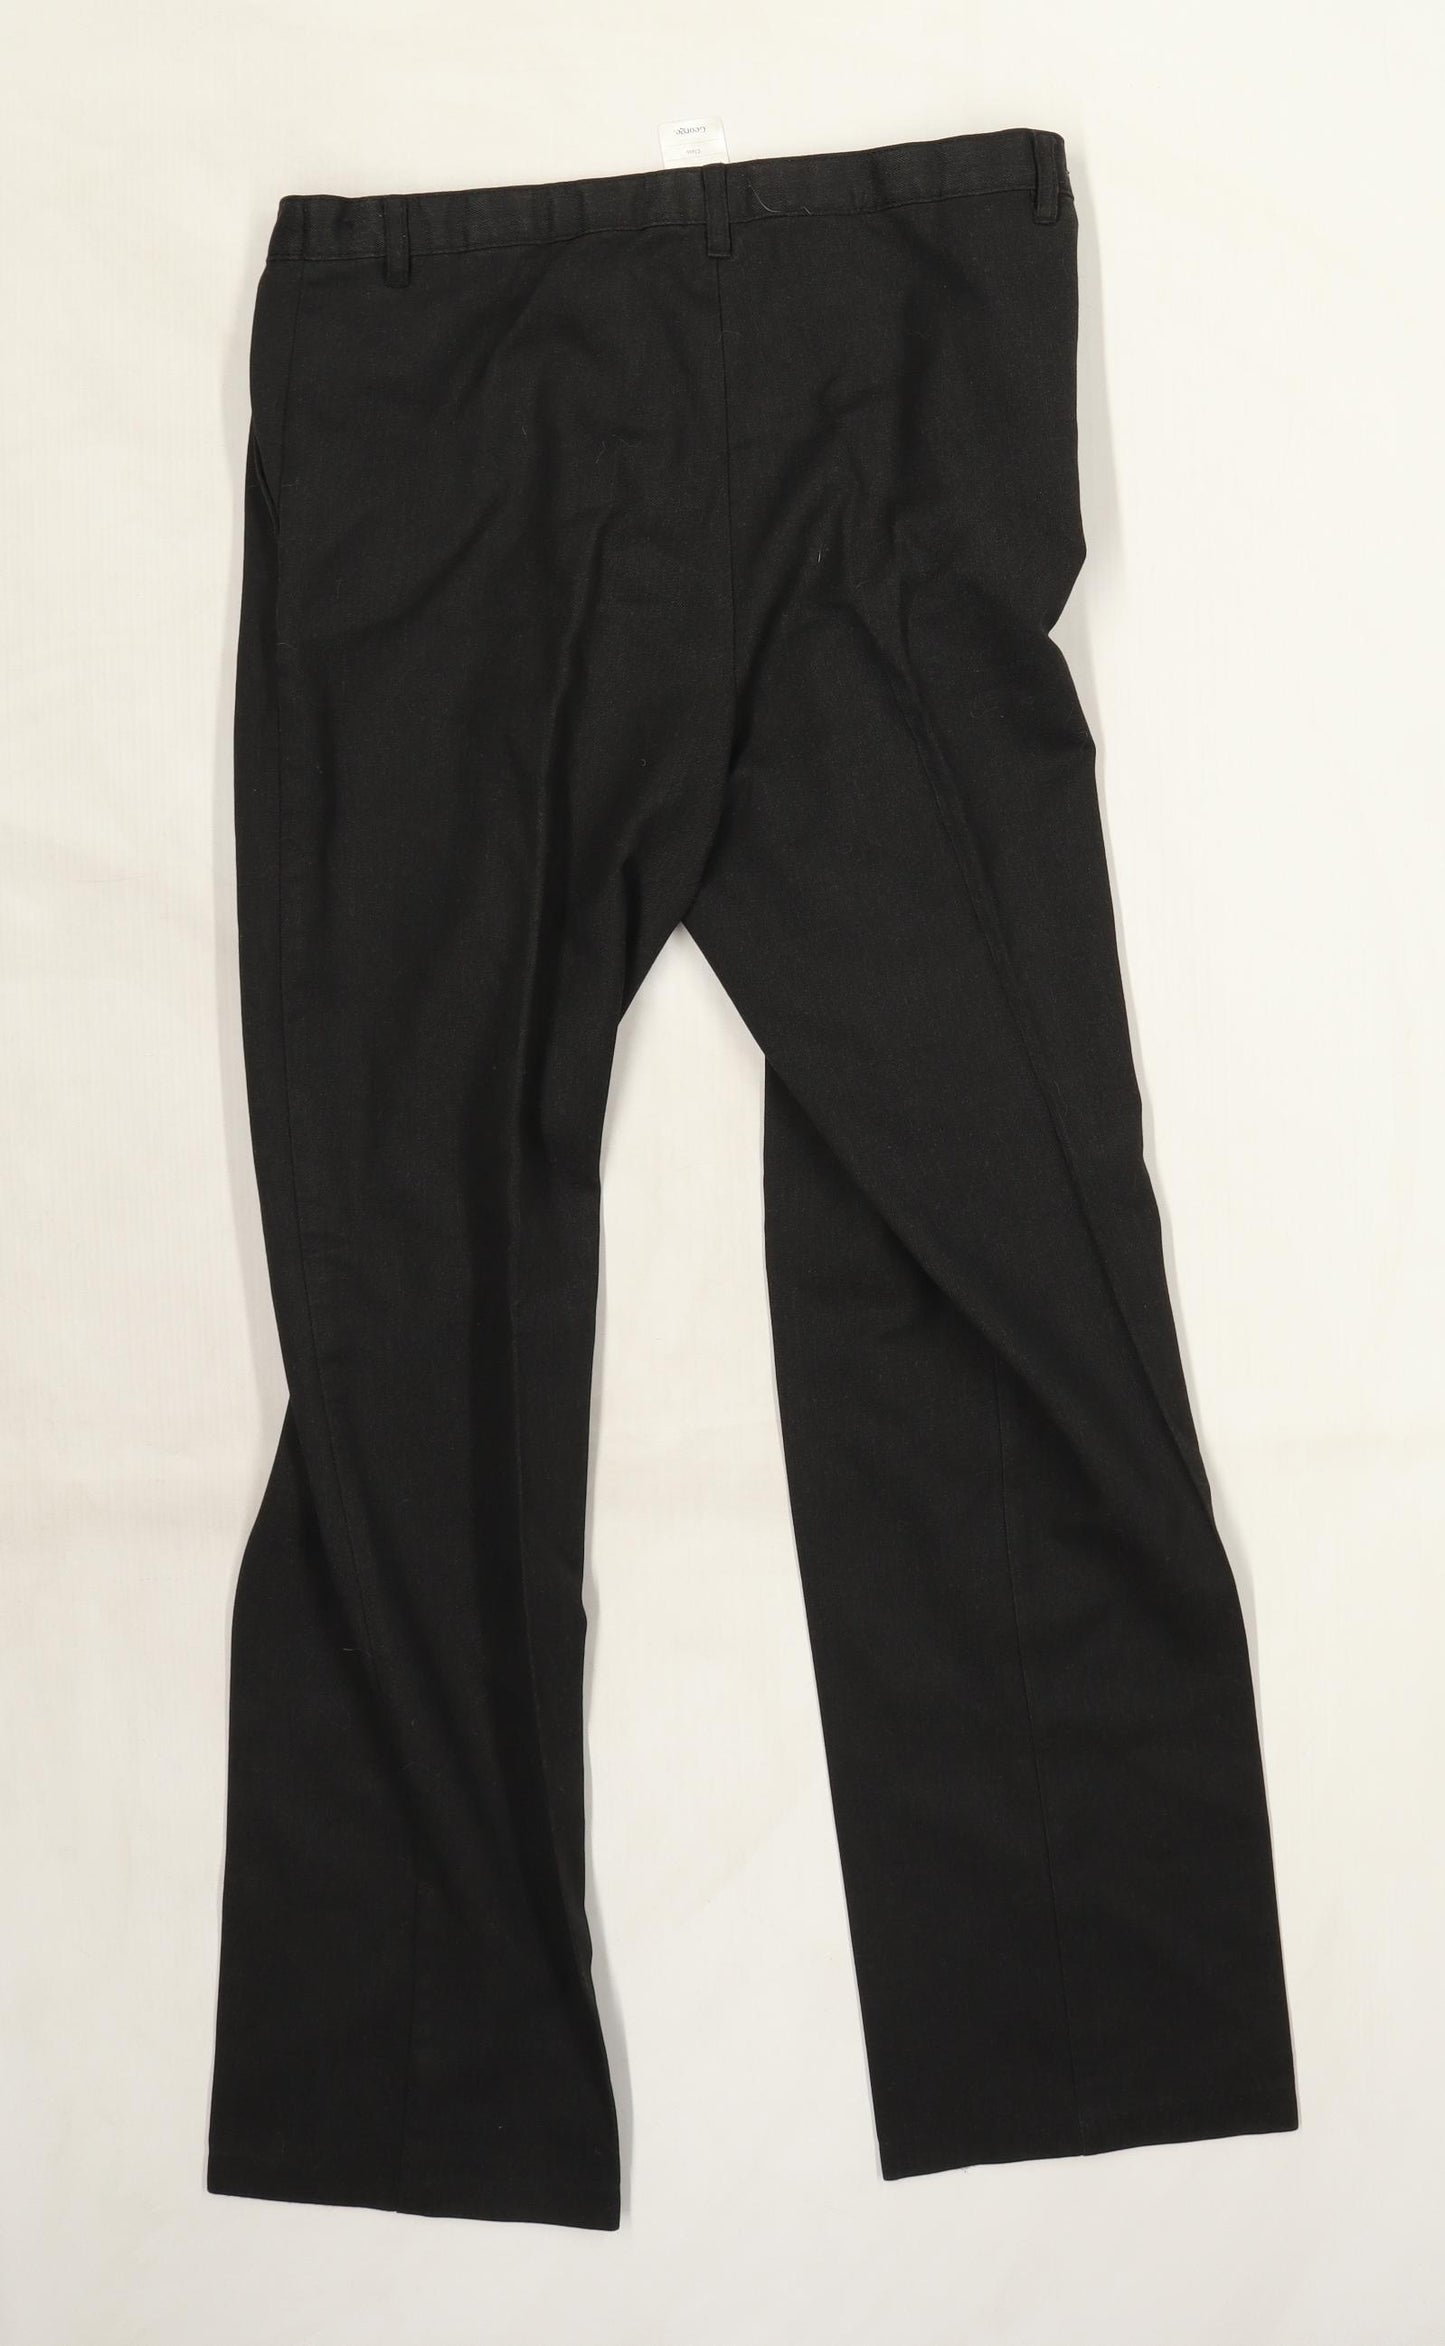 Asda Boys Grey  Rayon Chino Trousers Size 15 Years - School Trousers